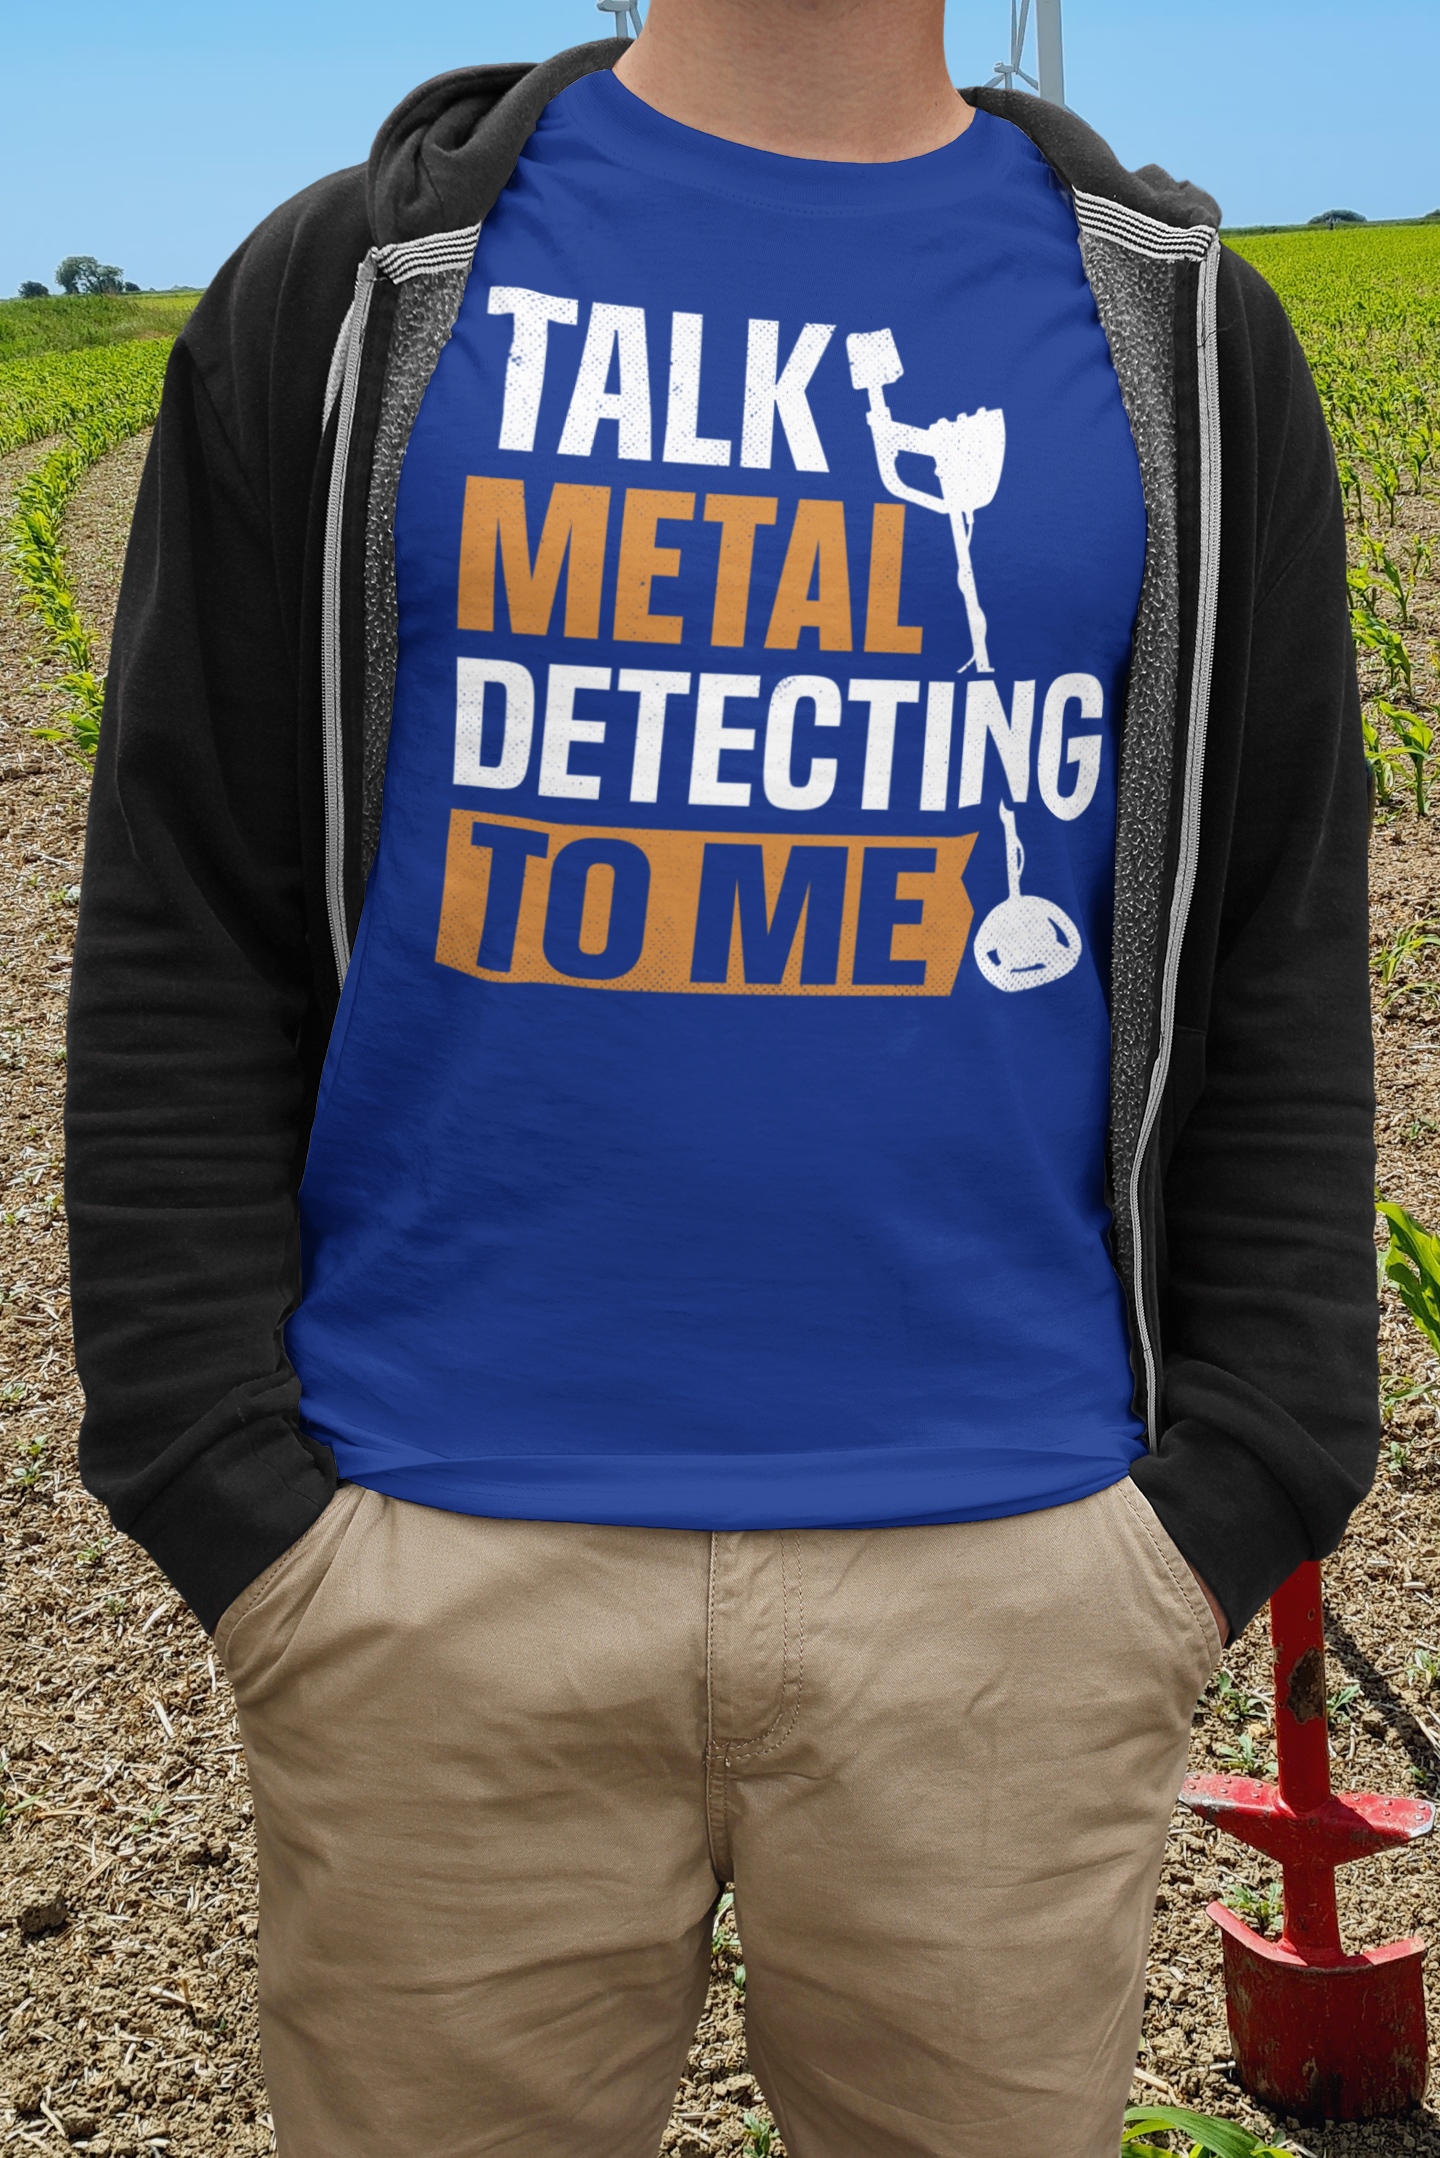 Talk metal detecting to me T-shirt